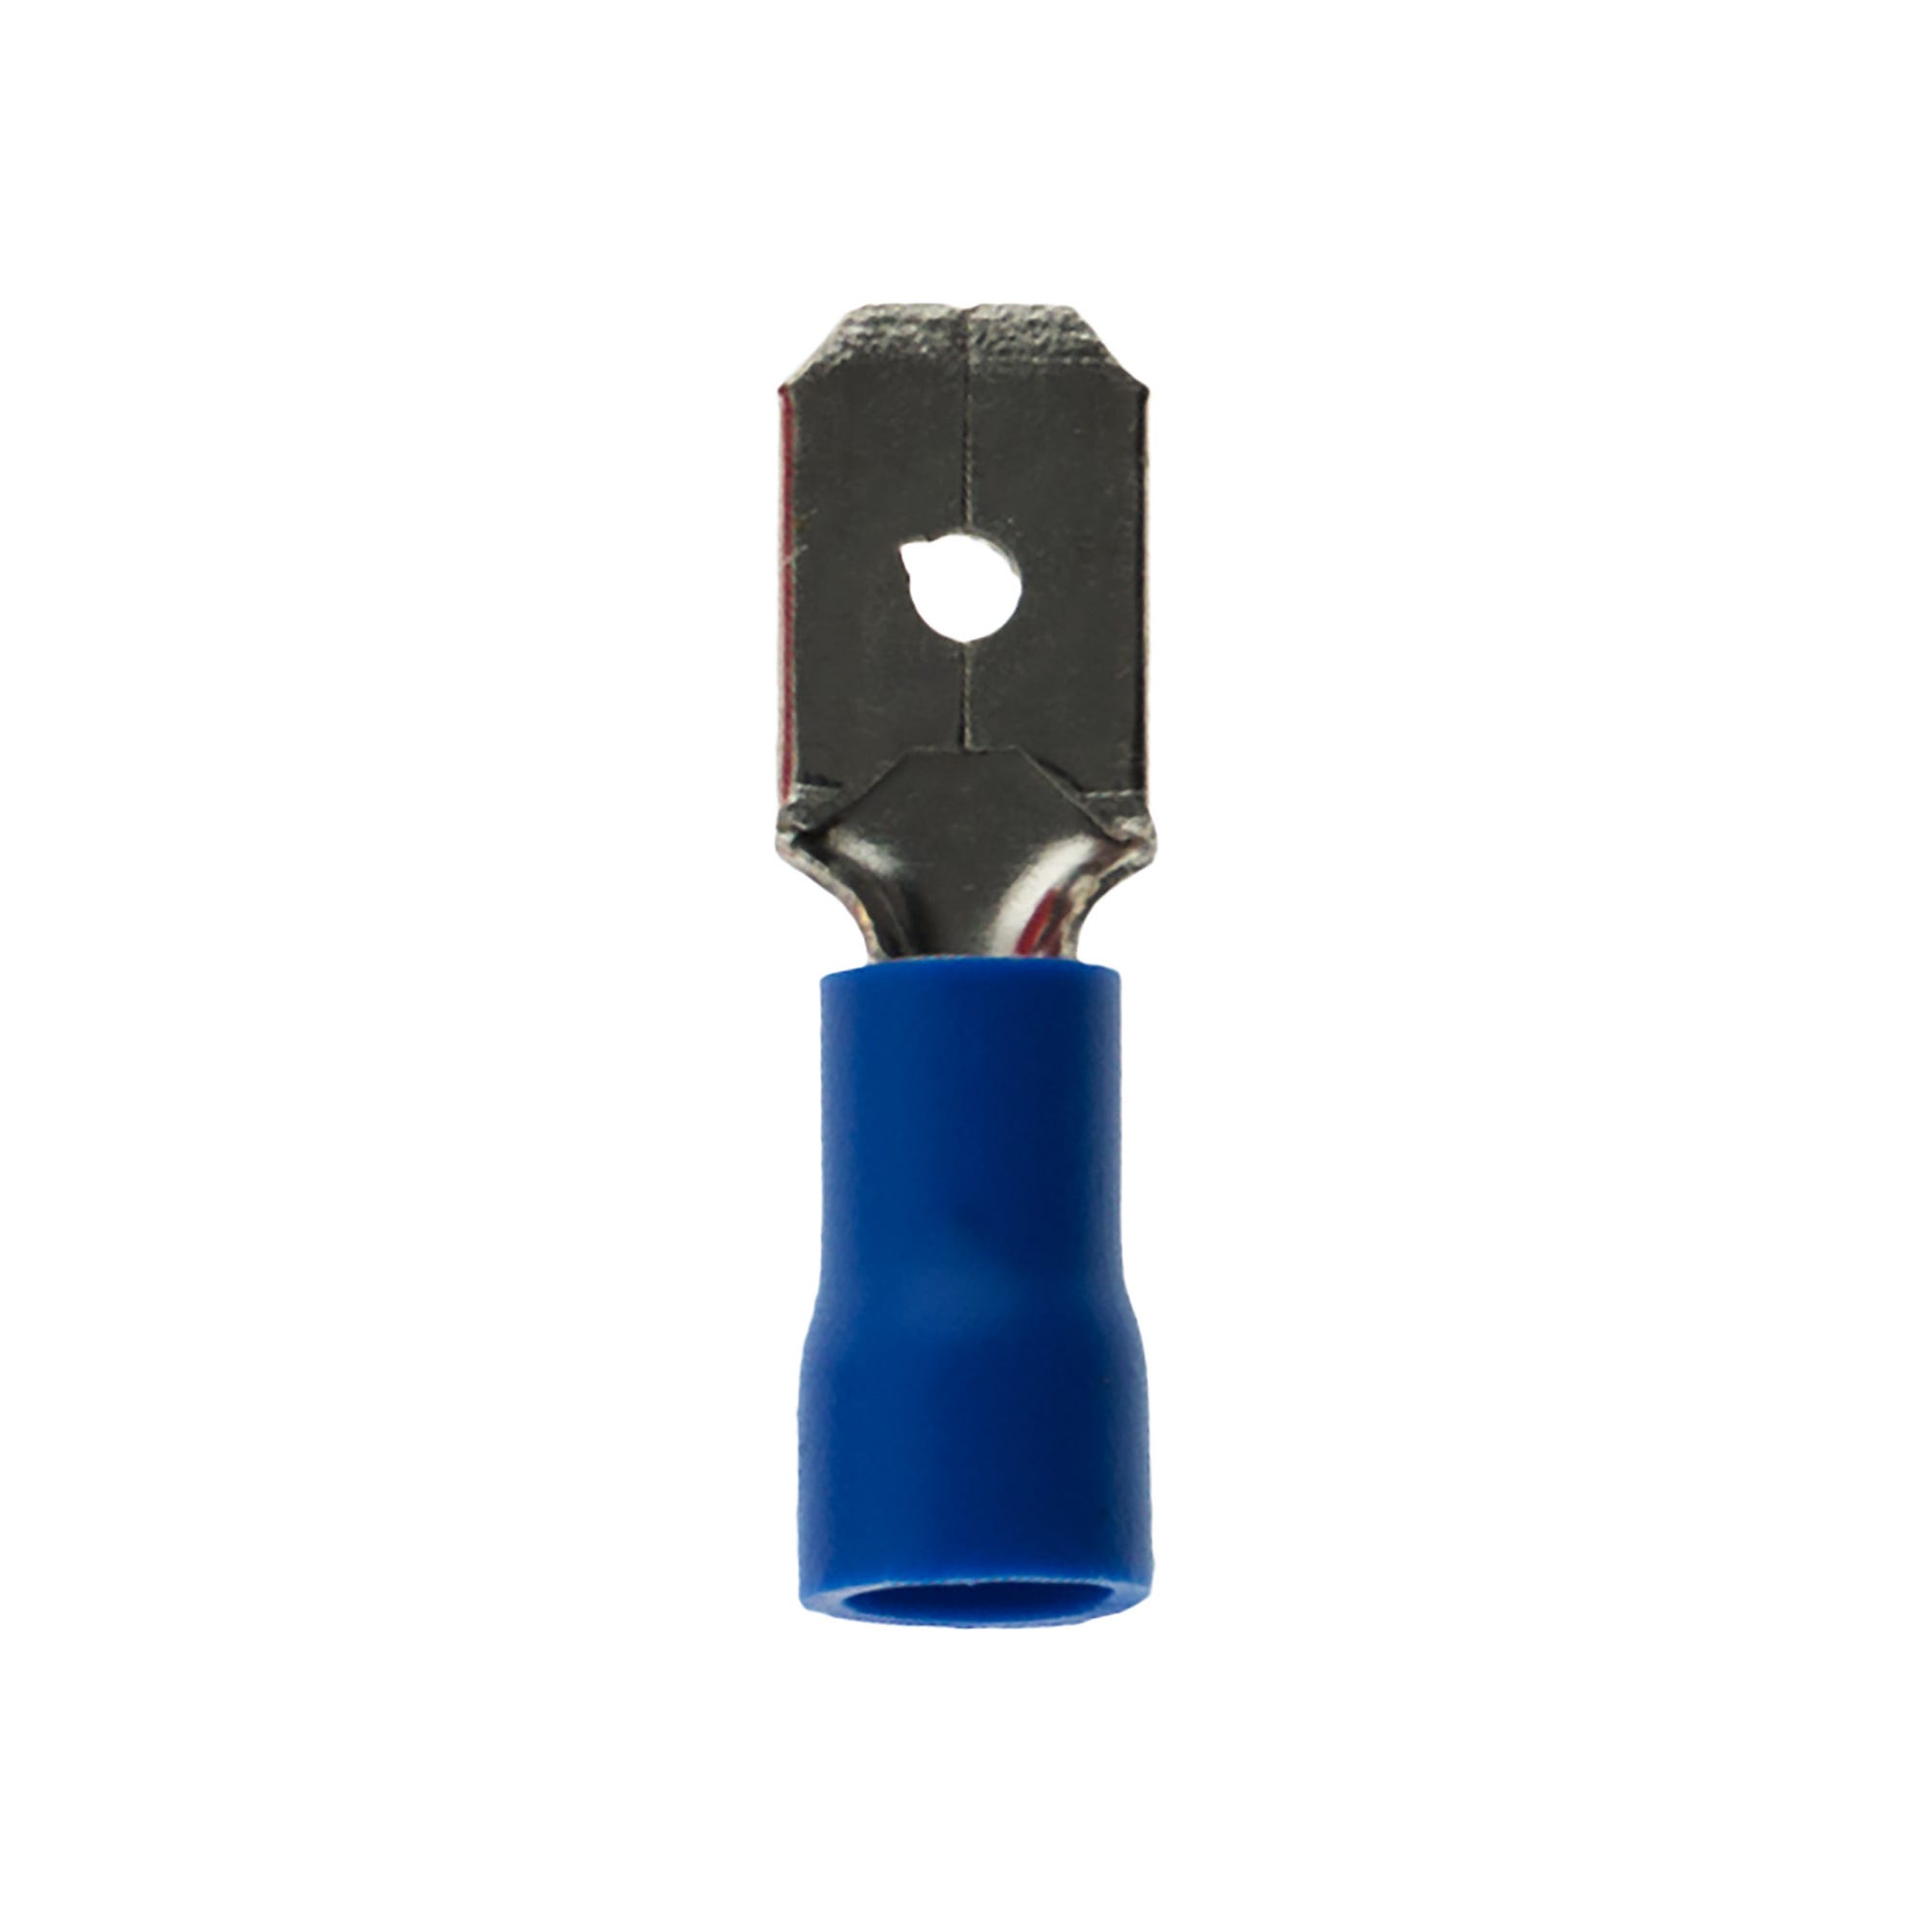 10 cosses bleu languettes mâles 6,3 mm - Zenitech 0